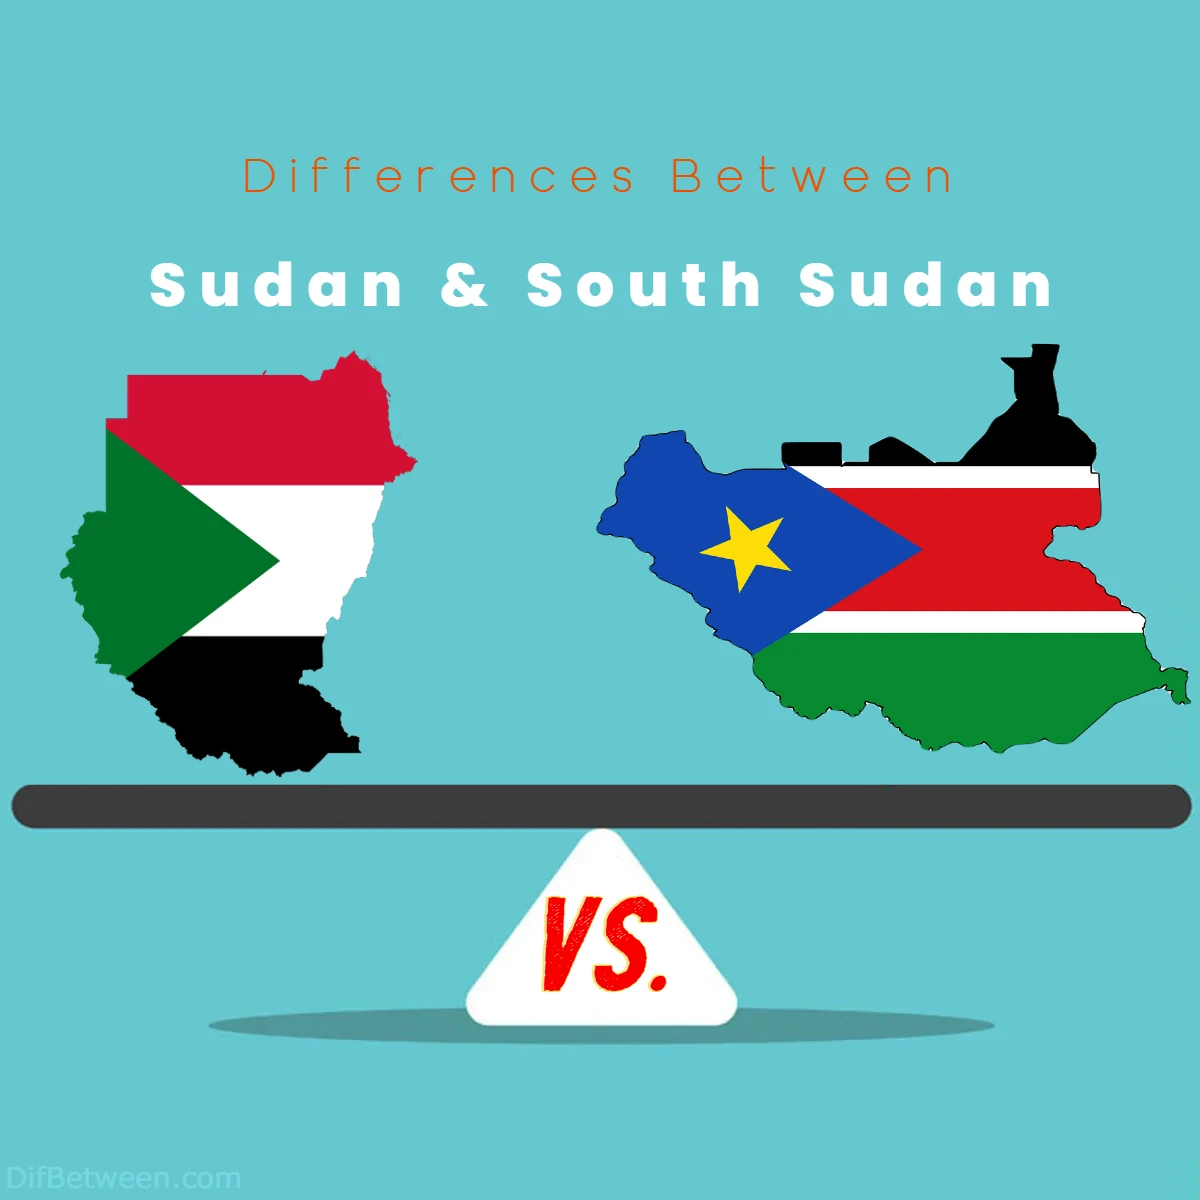 Differences Between Sudan vs South Sudan